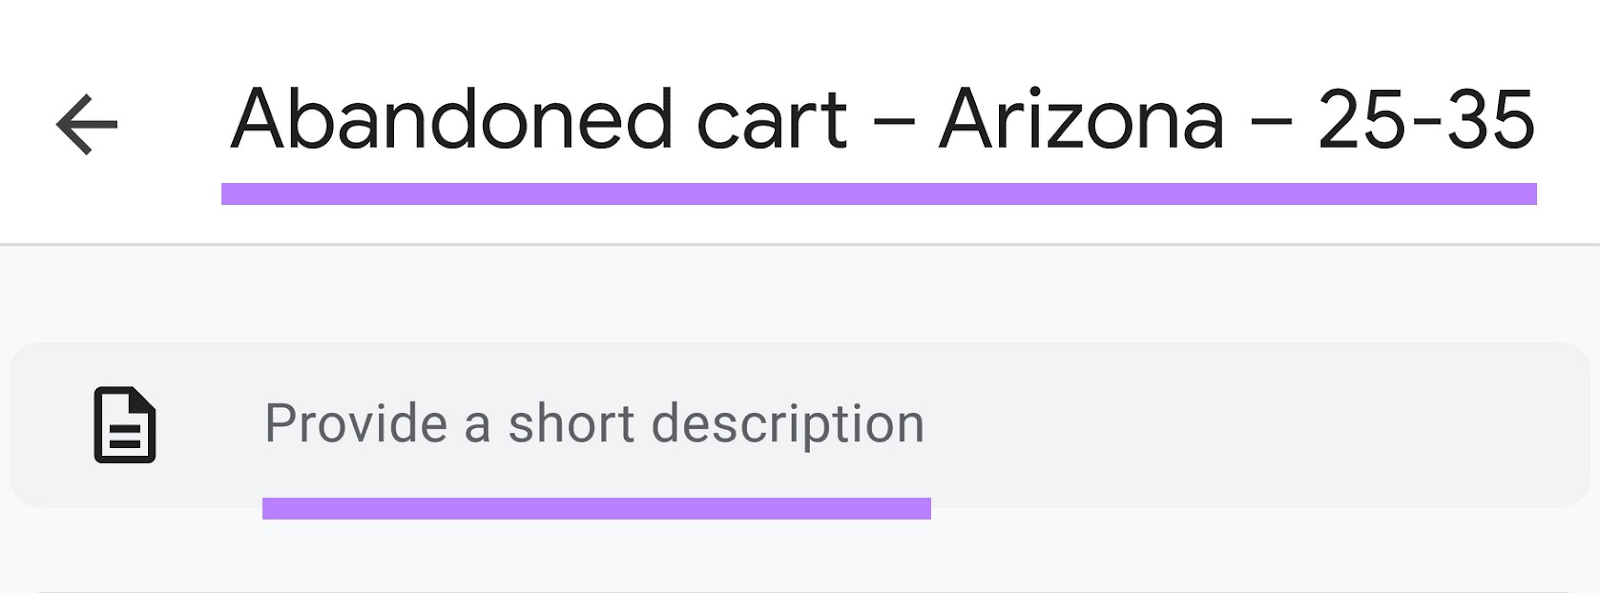 Custom Audience named "Abandoned cart - Arizona - 25-35"